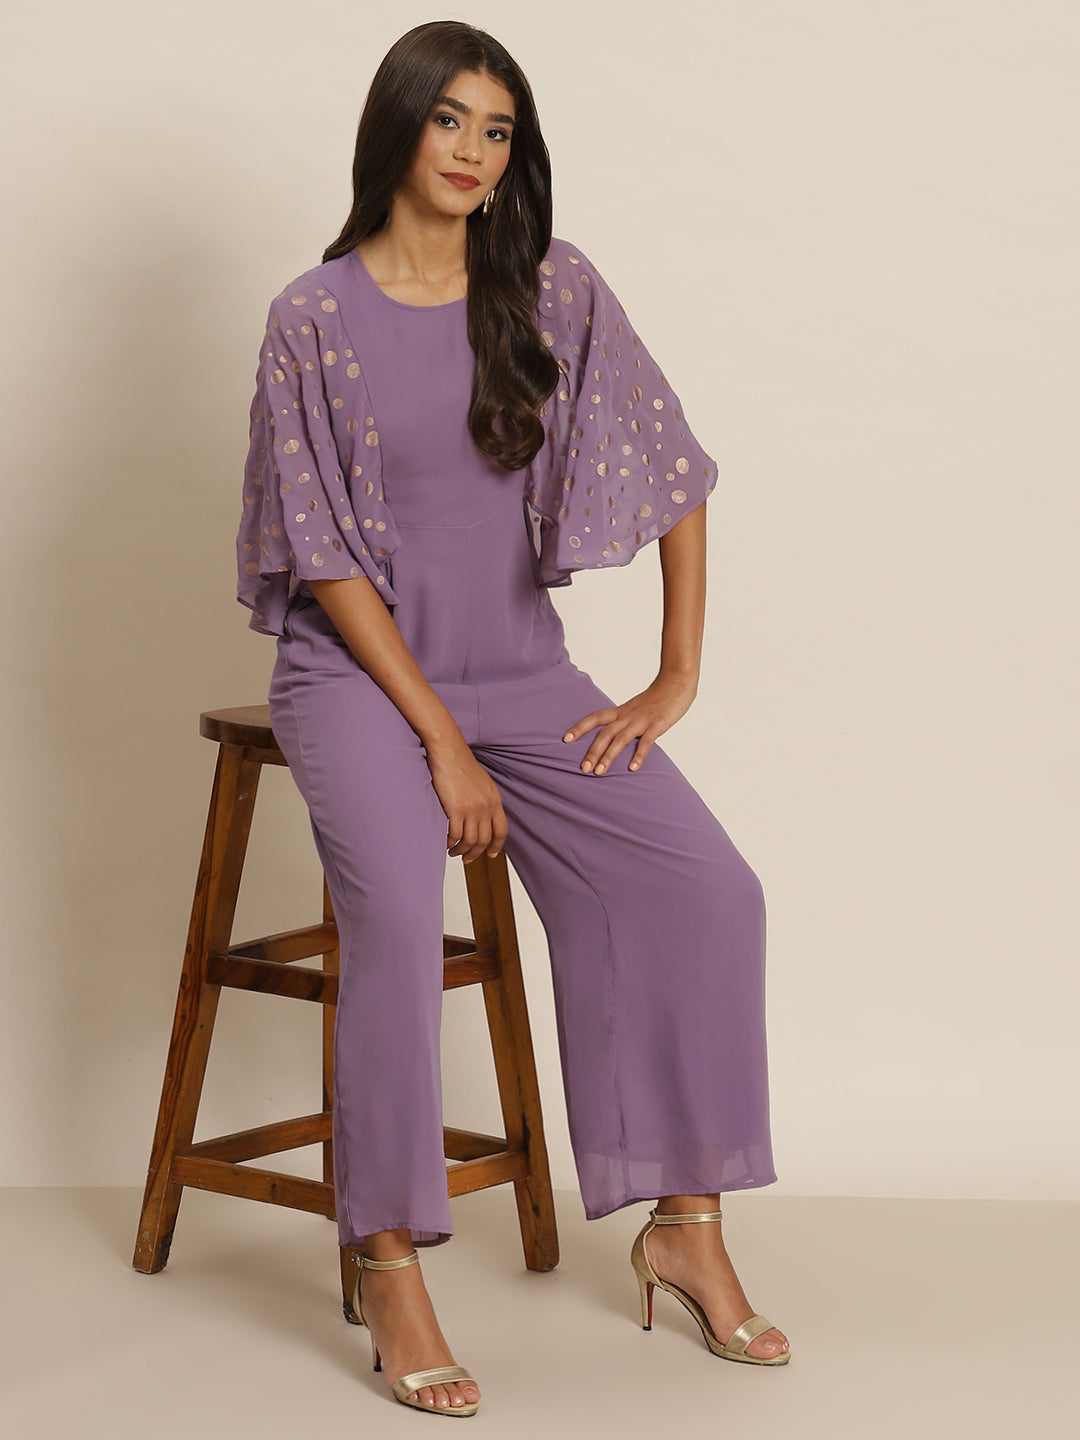 Women Purple Foil Print Flared Sleeve Jumpsuit